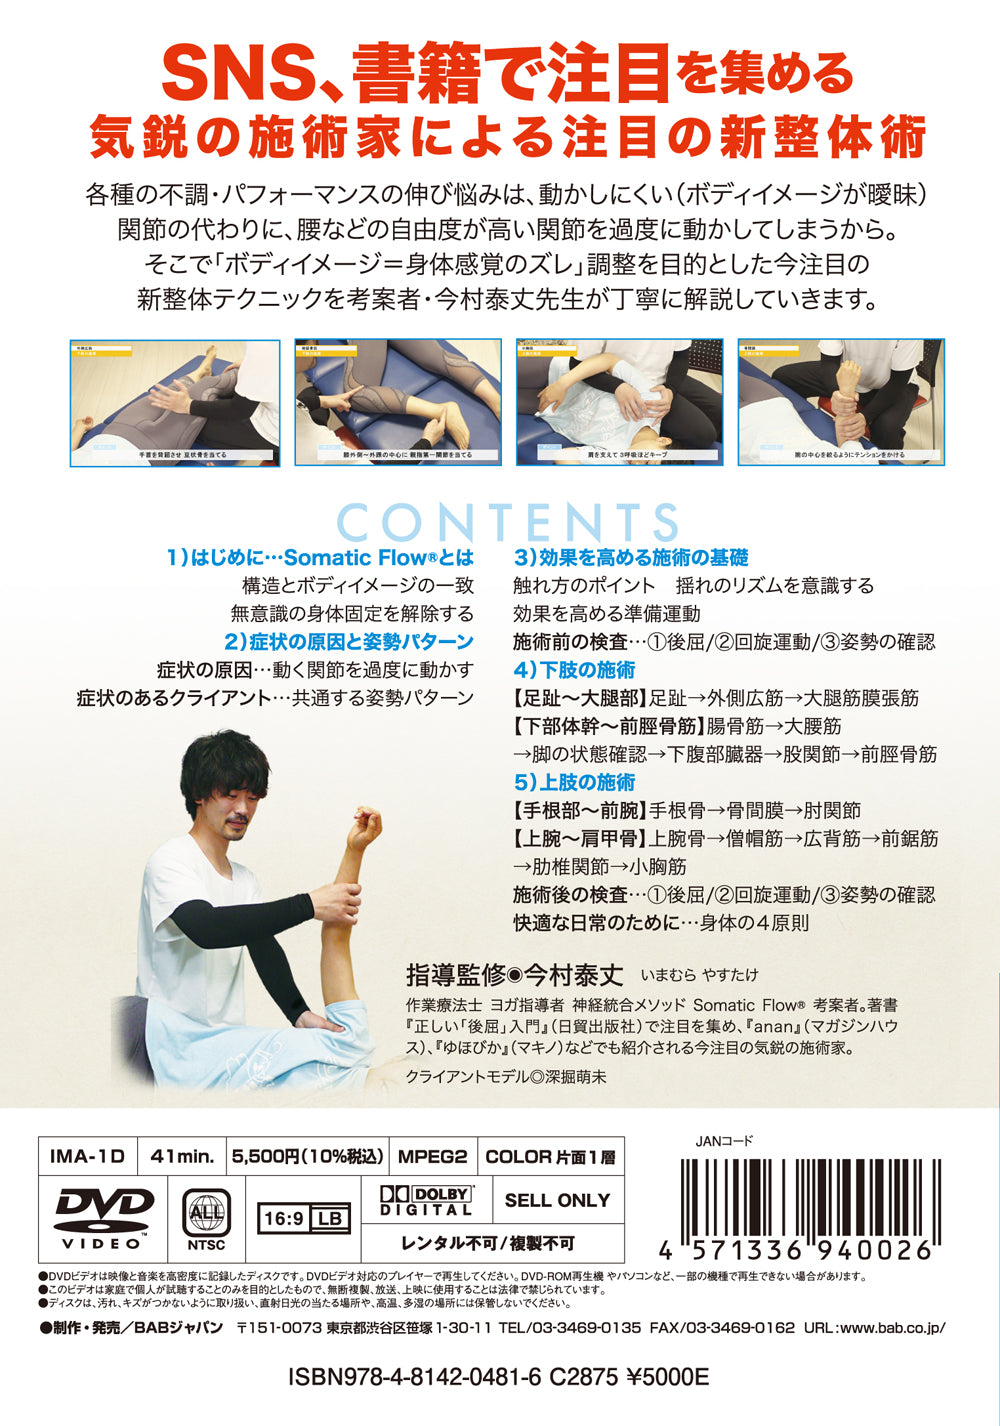 Somatic Flow DVD by Yasutake Imamura